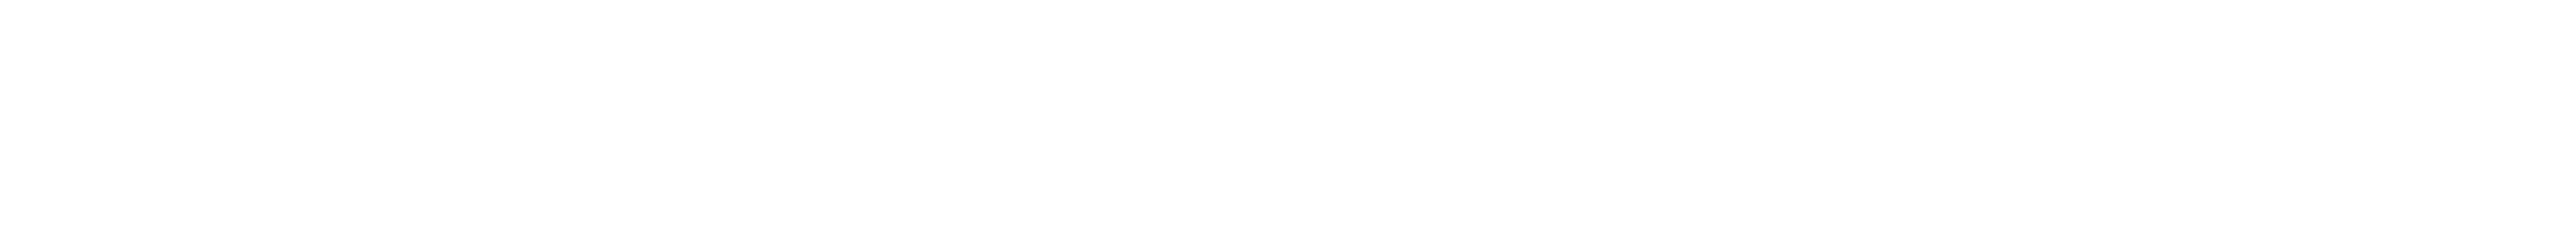 UNRWA_Official_Standard_Logo